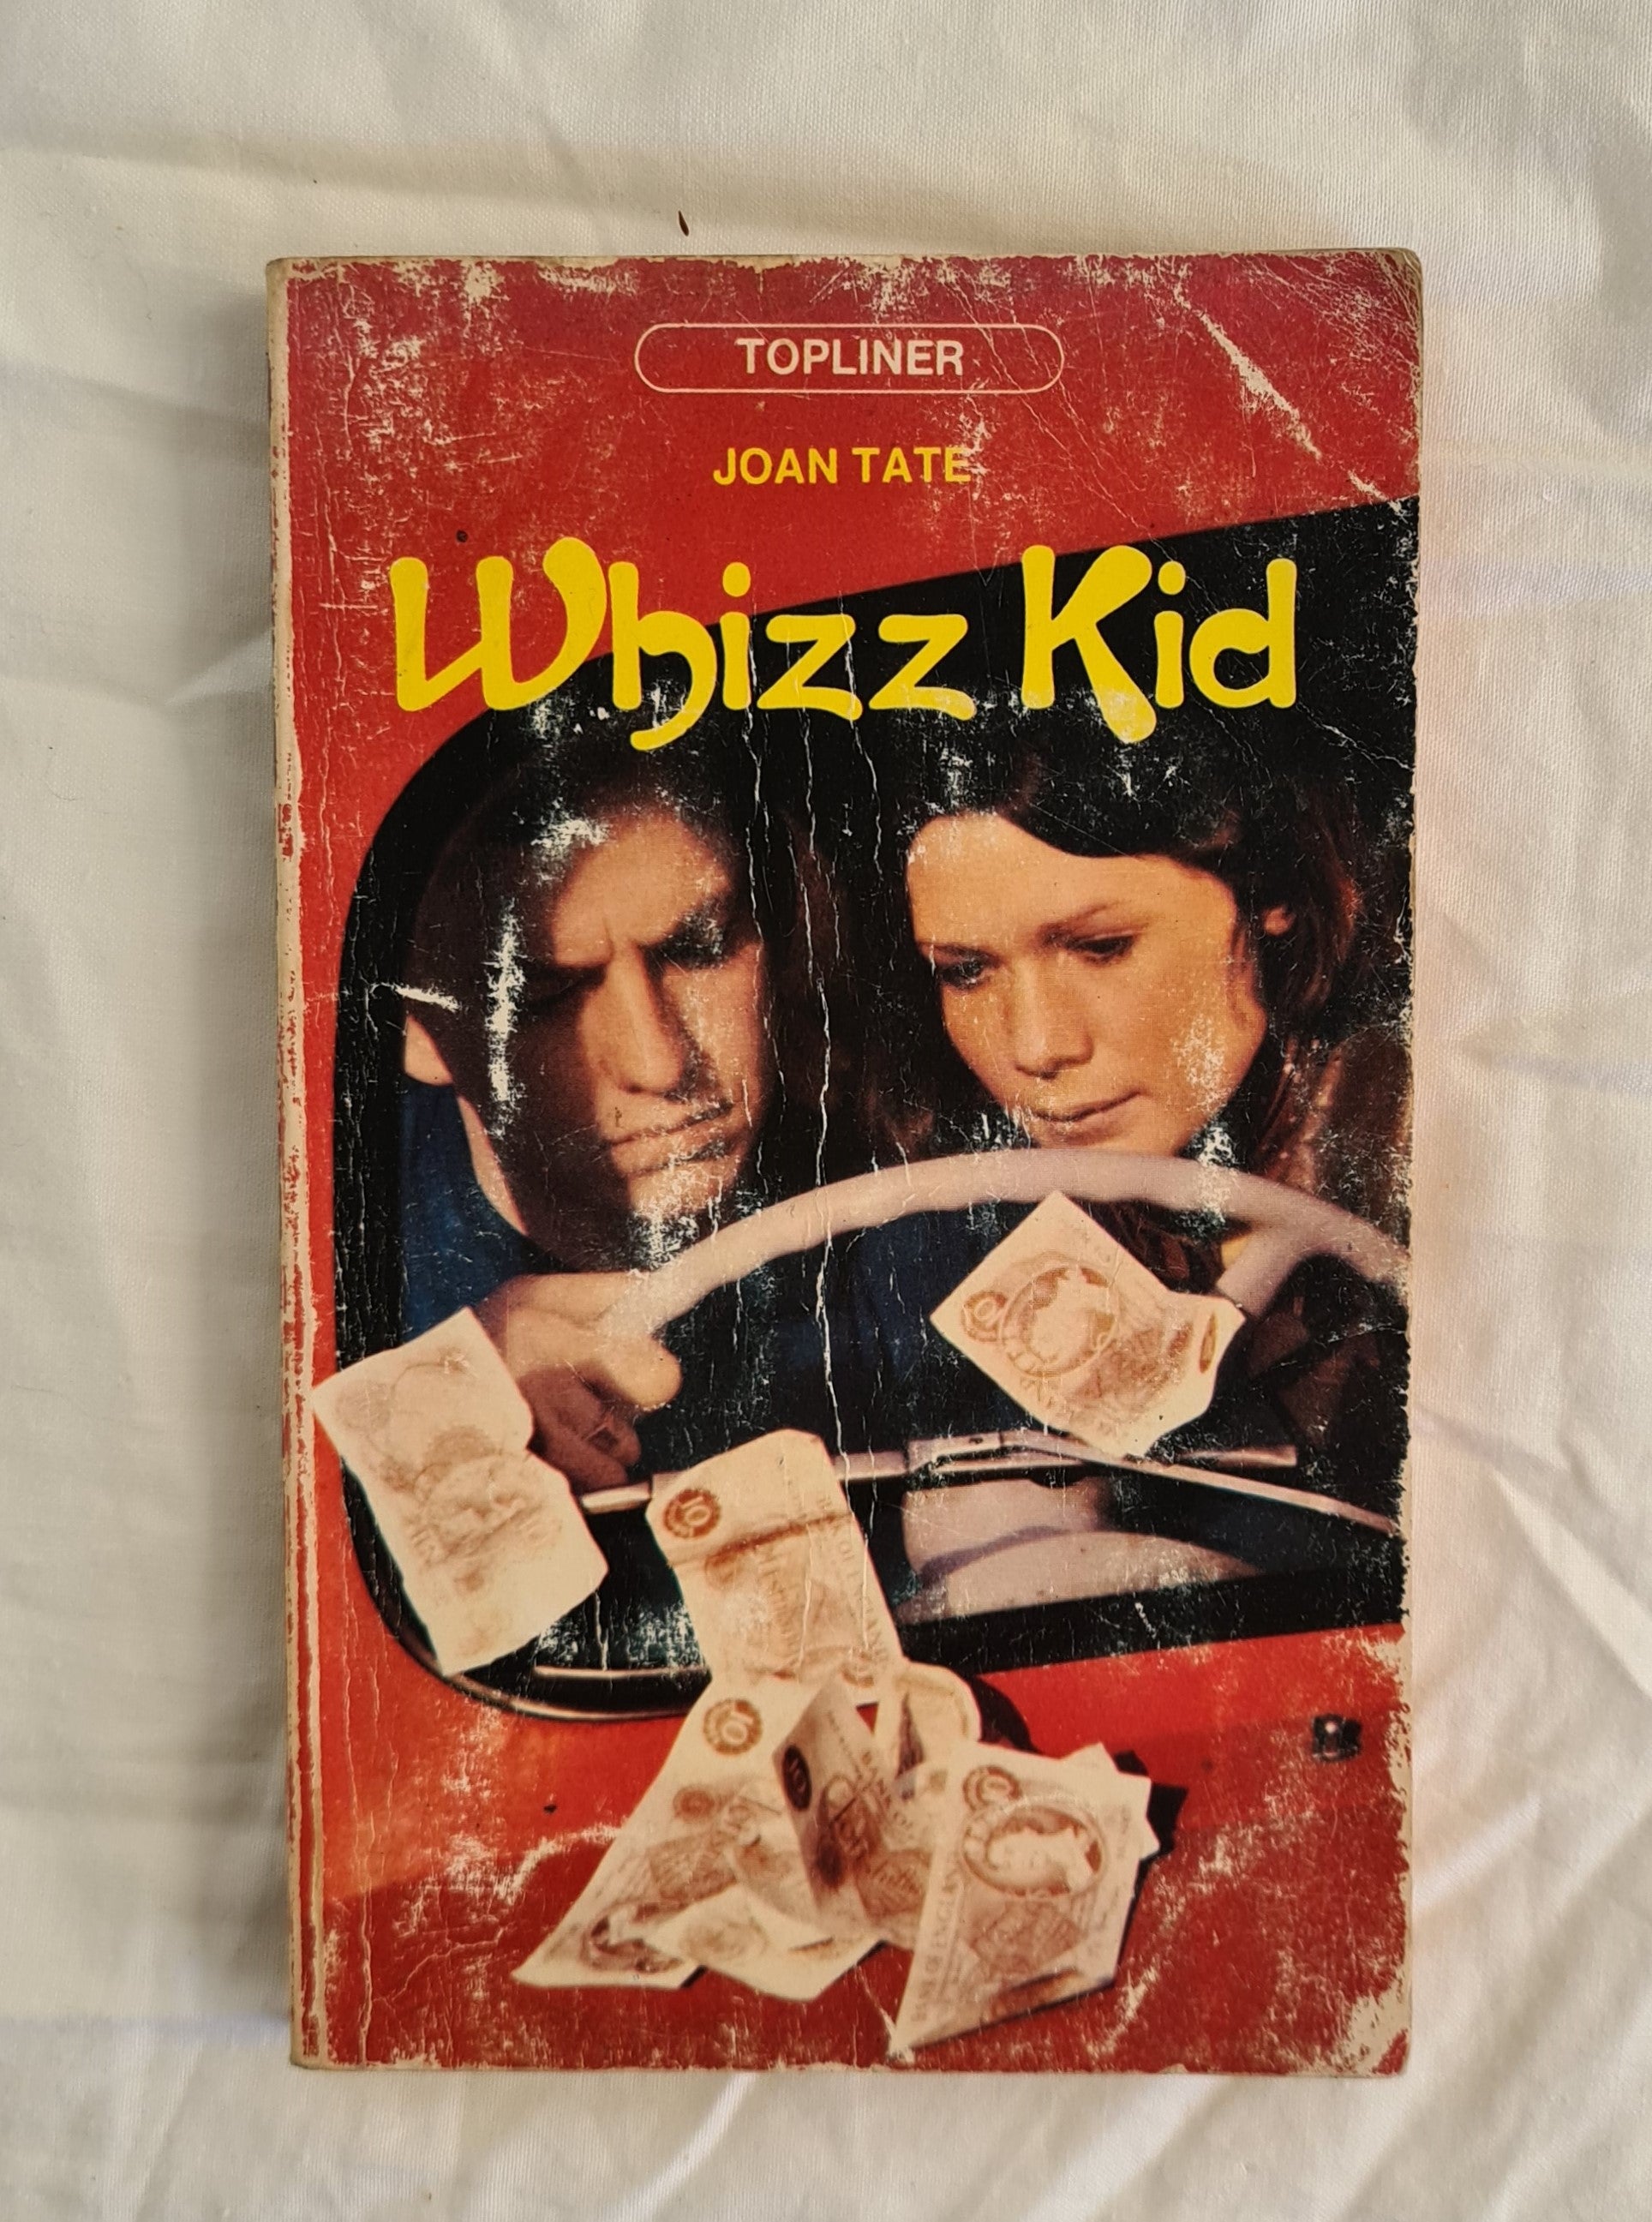 Whizz Kid by Joan Tate